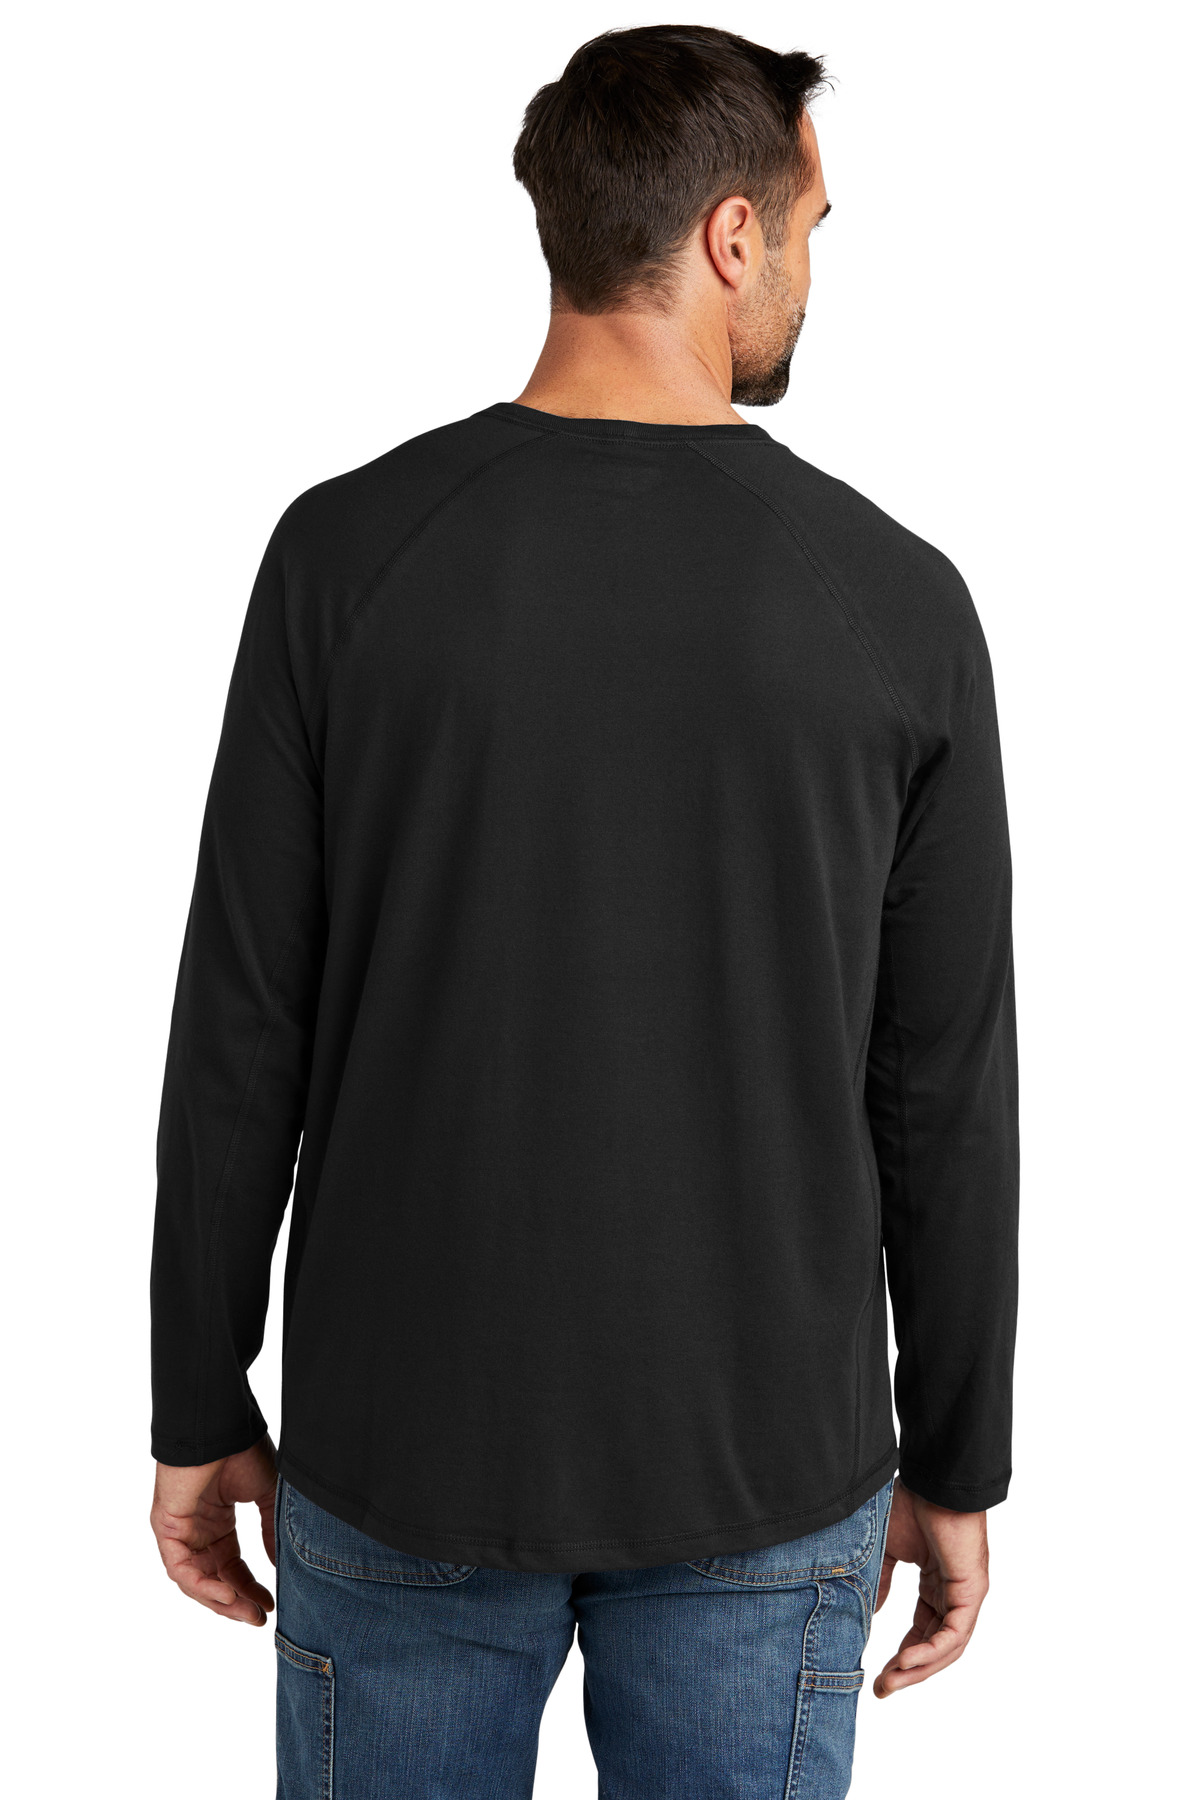 Carhartt Force ® Long Sleeve Pocket T-Shirt CT104617 - Custom Shirt Shop